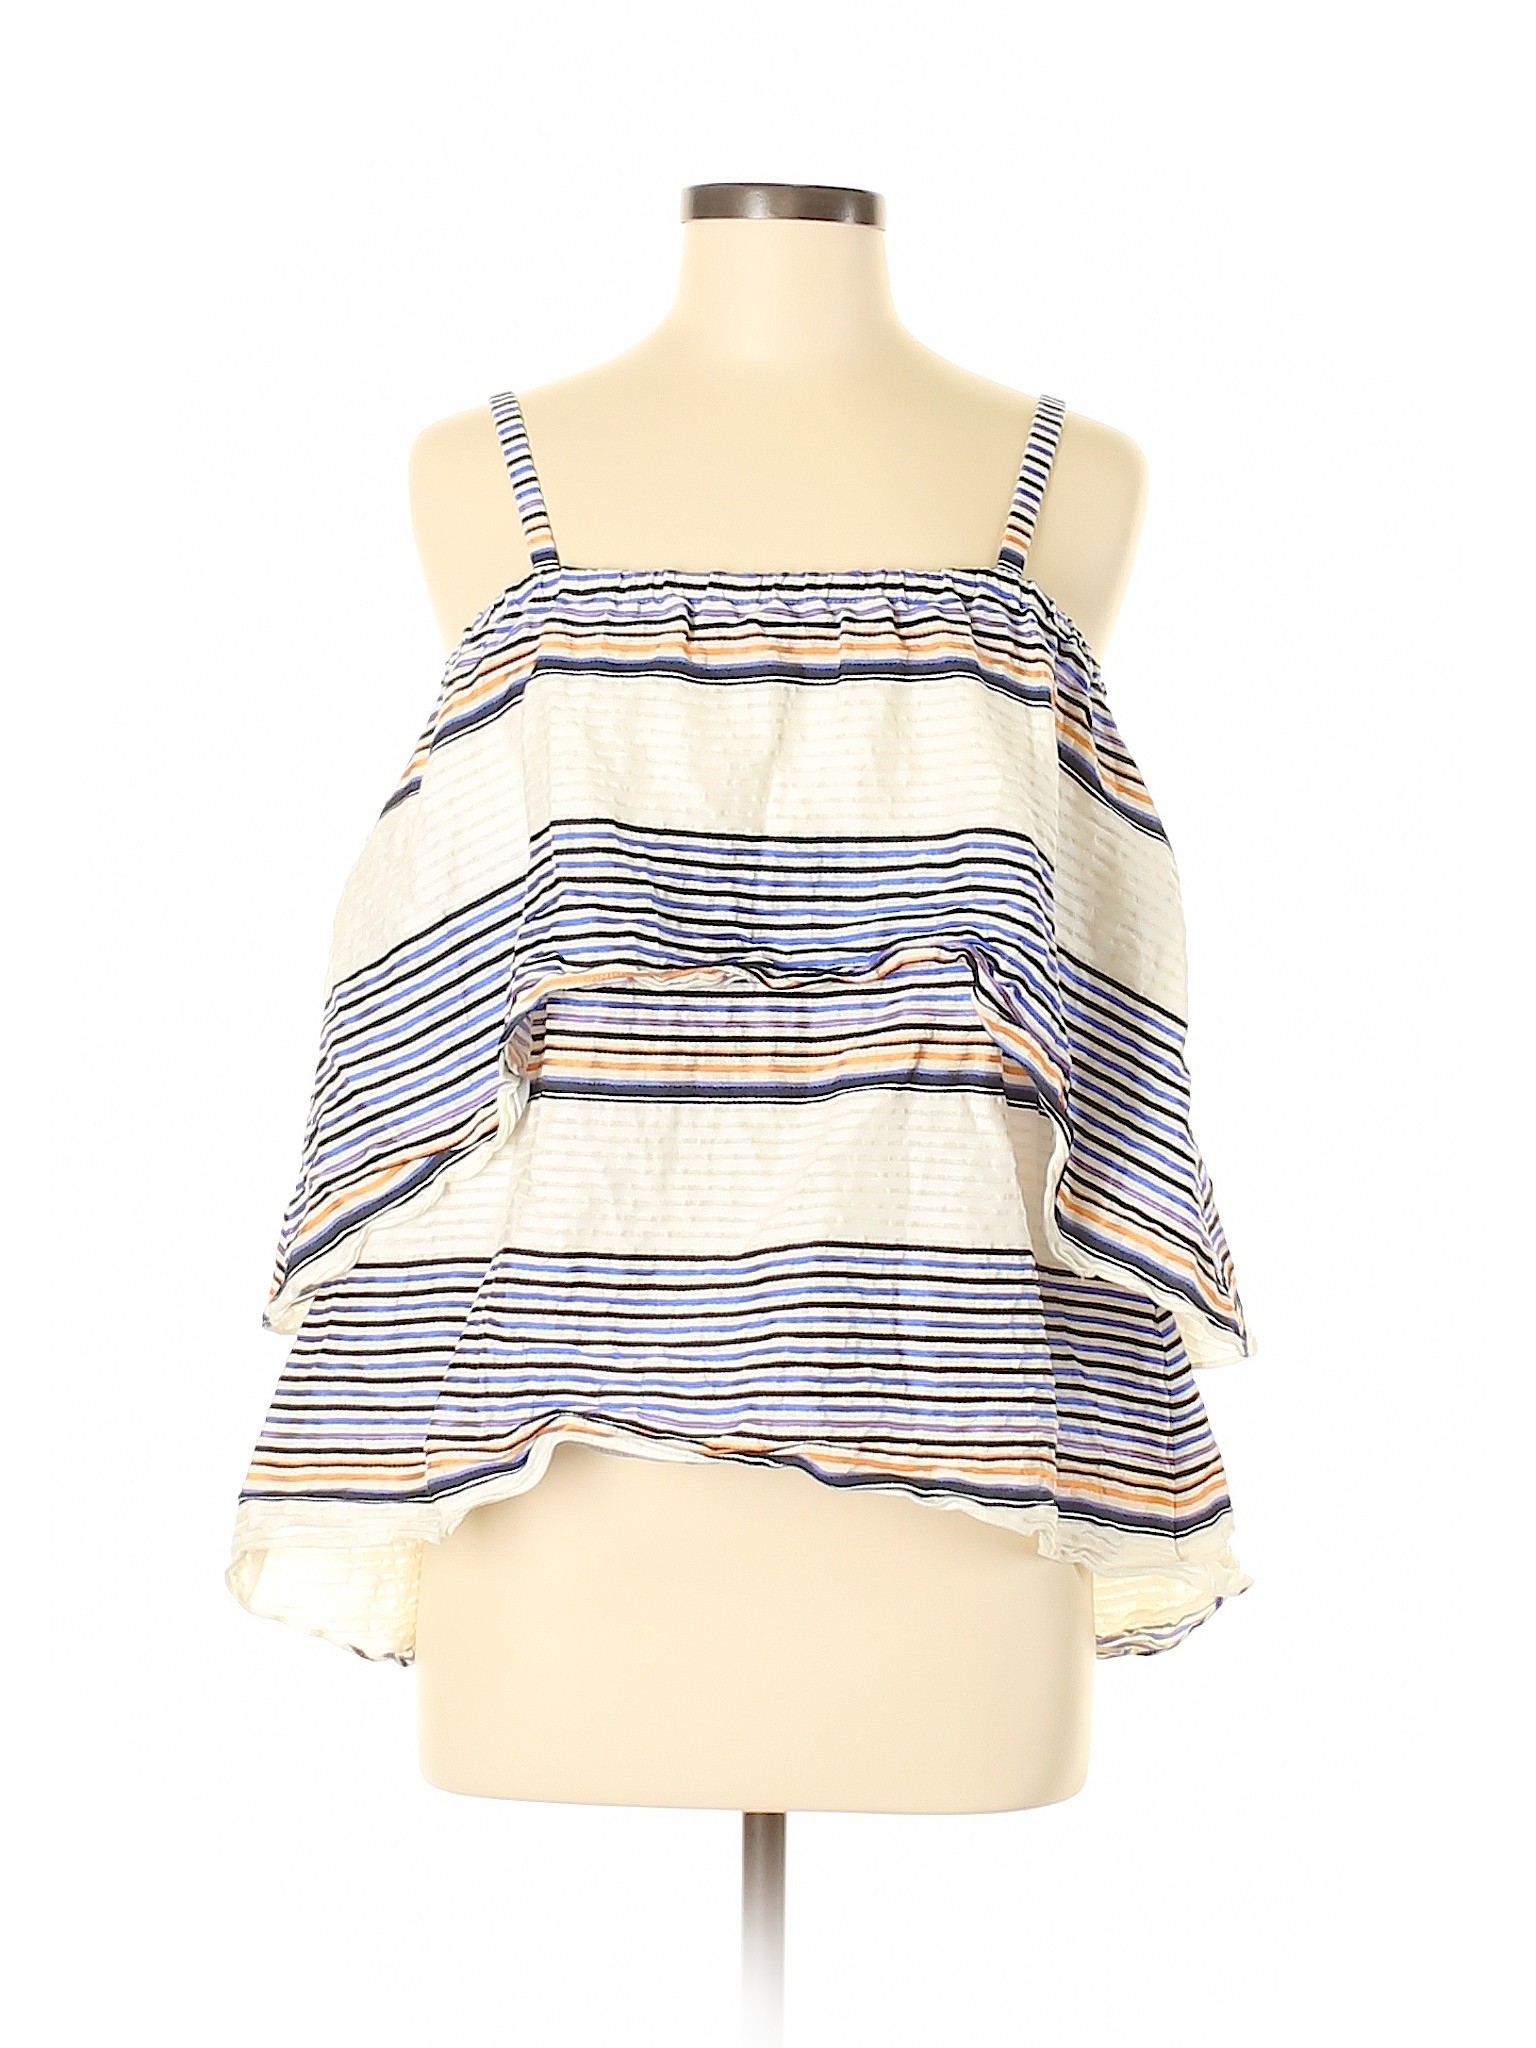 Tanya Taylor Stripes Blue Sleeveless Blouse Size 4 - 82% off | thredUP